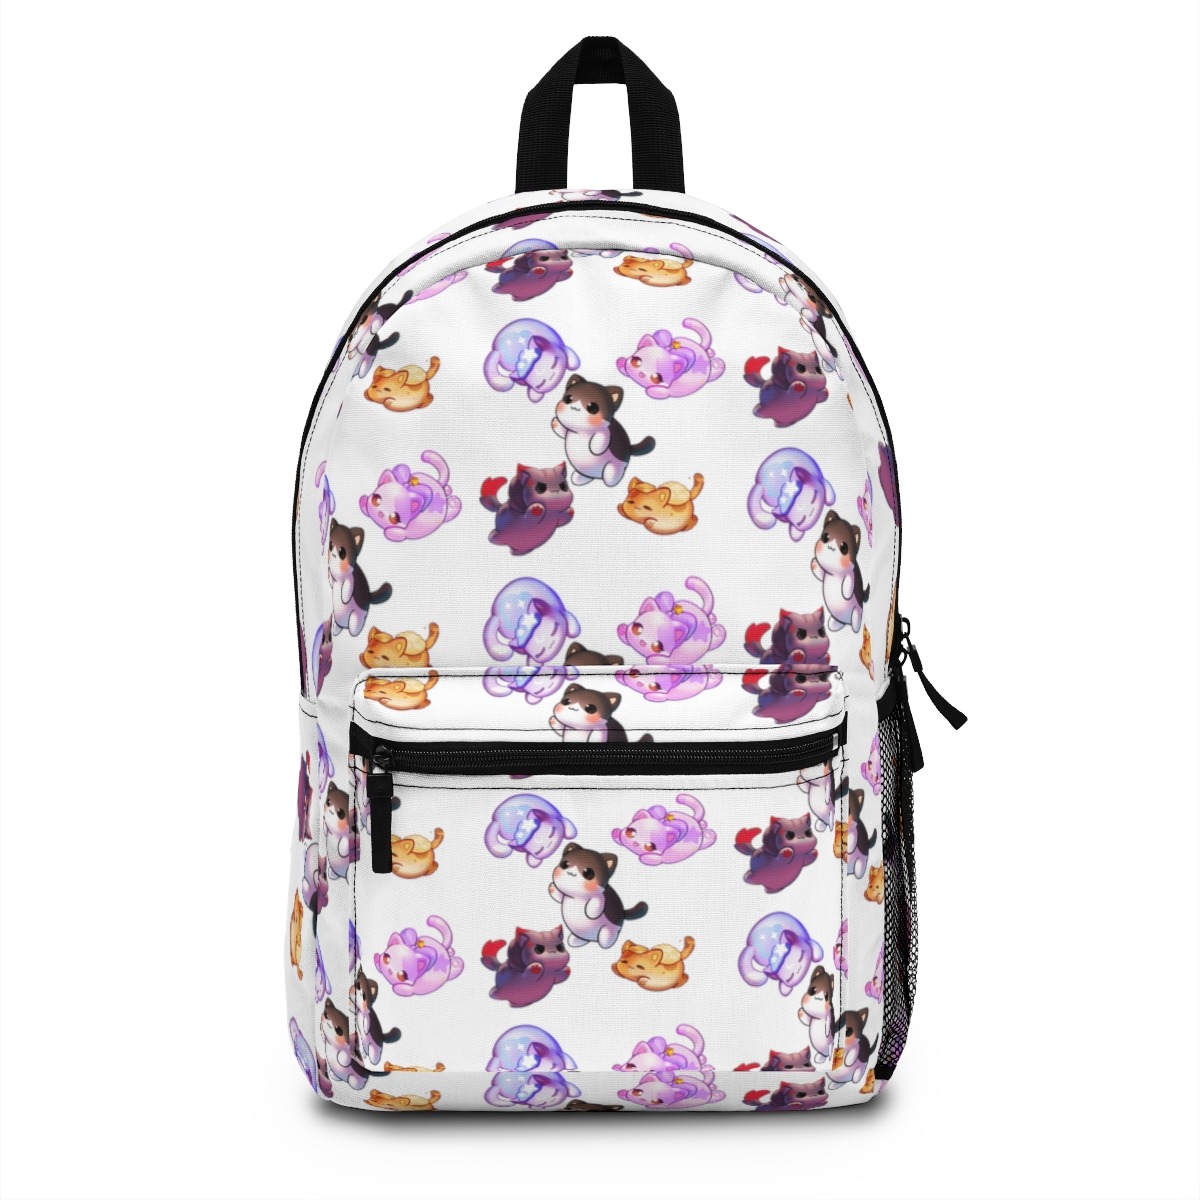 https://nextshirt.shop/wp-content/uploads/2021/08/Cute-backpack-Cute-bookbag-Cute-merch-Cute-apparel-7.jpg